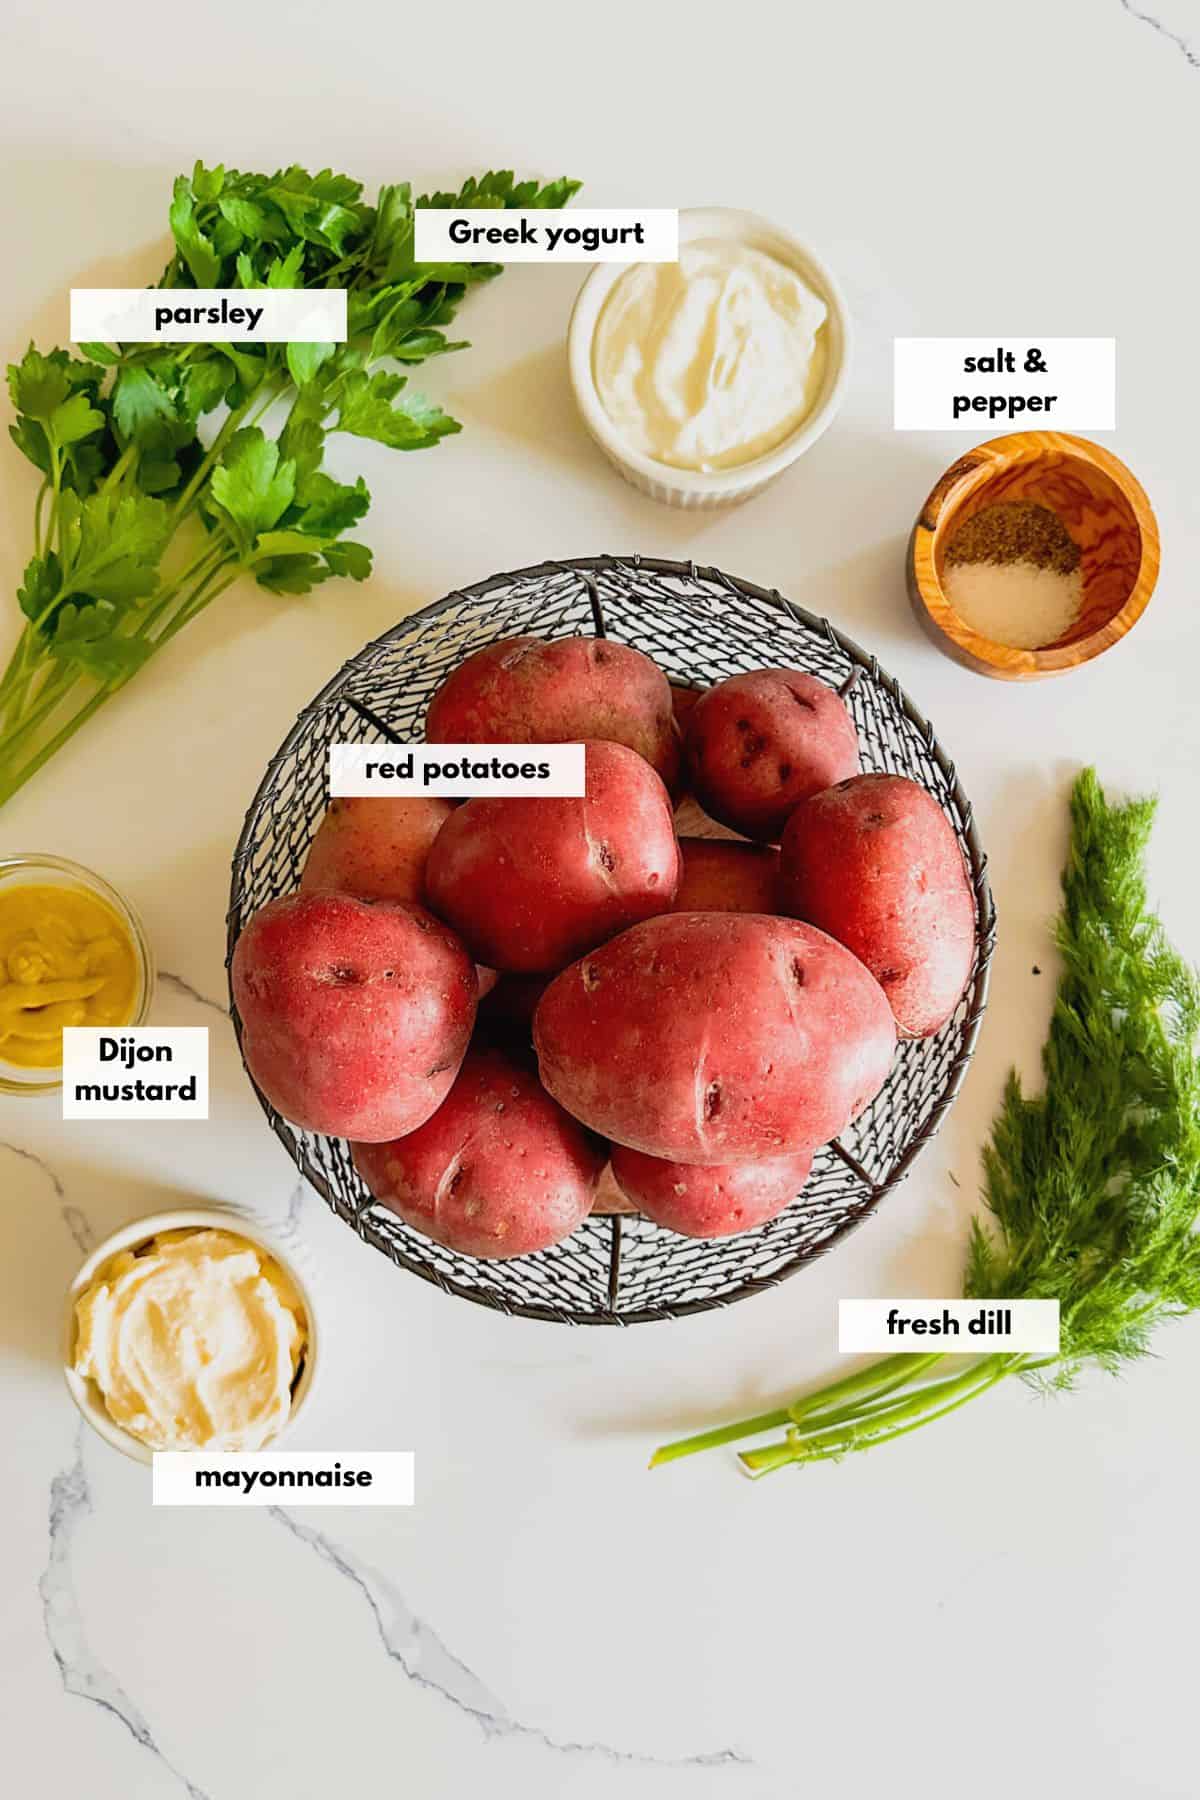 Ingredients to make fresh potato salad including red potatoes, parsley, fresh dill, Dijon mustard, Greek yogurt, sour cream, salt and pepper.